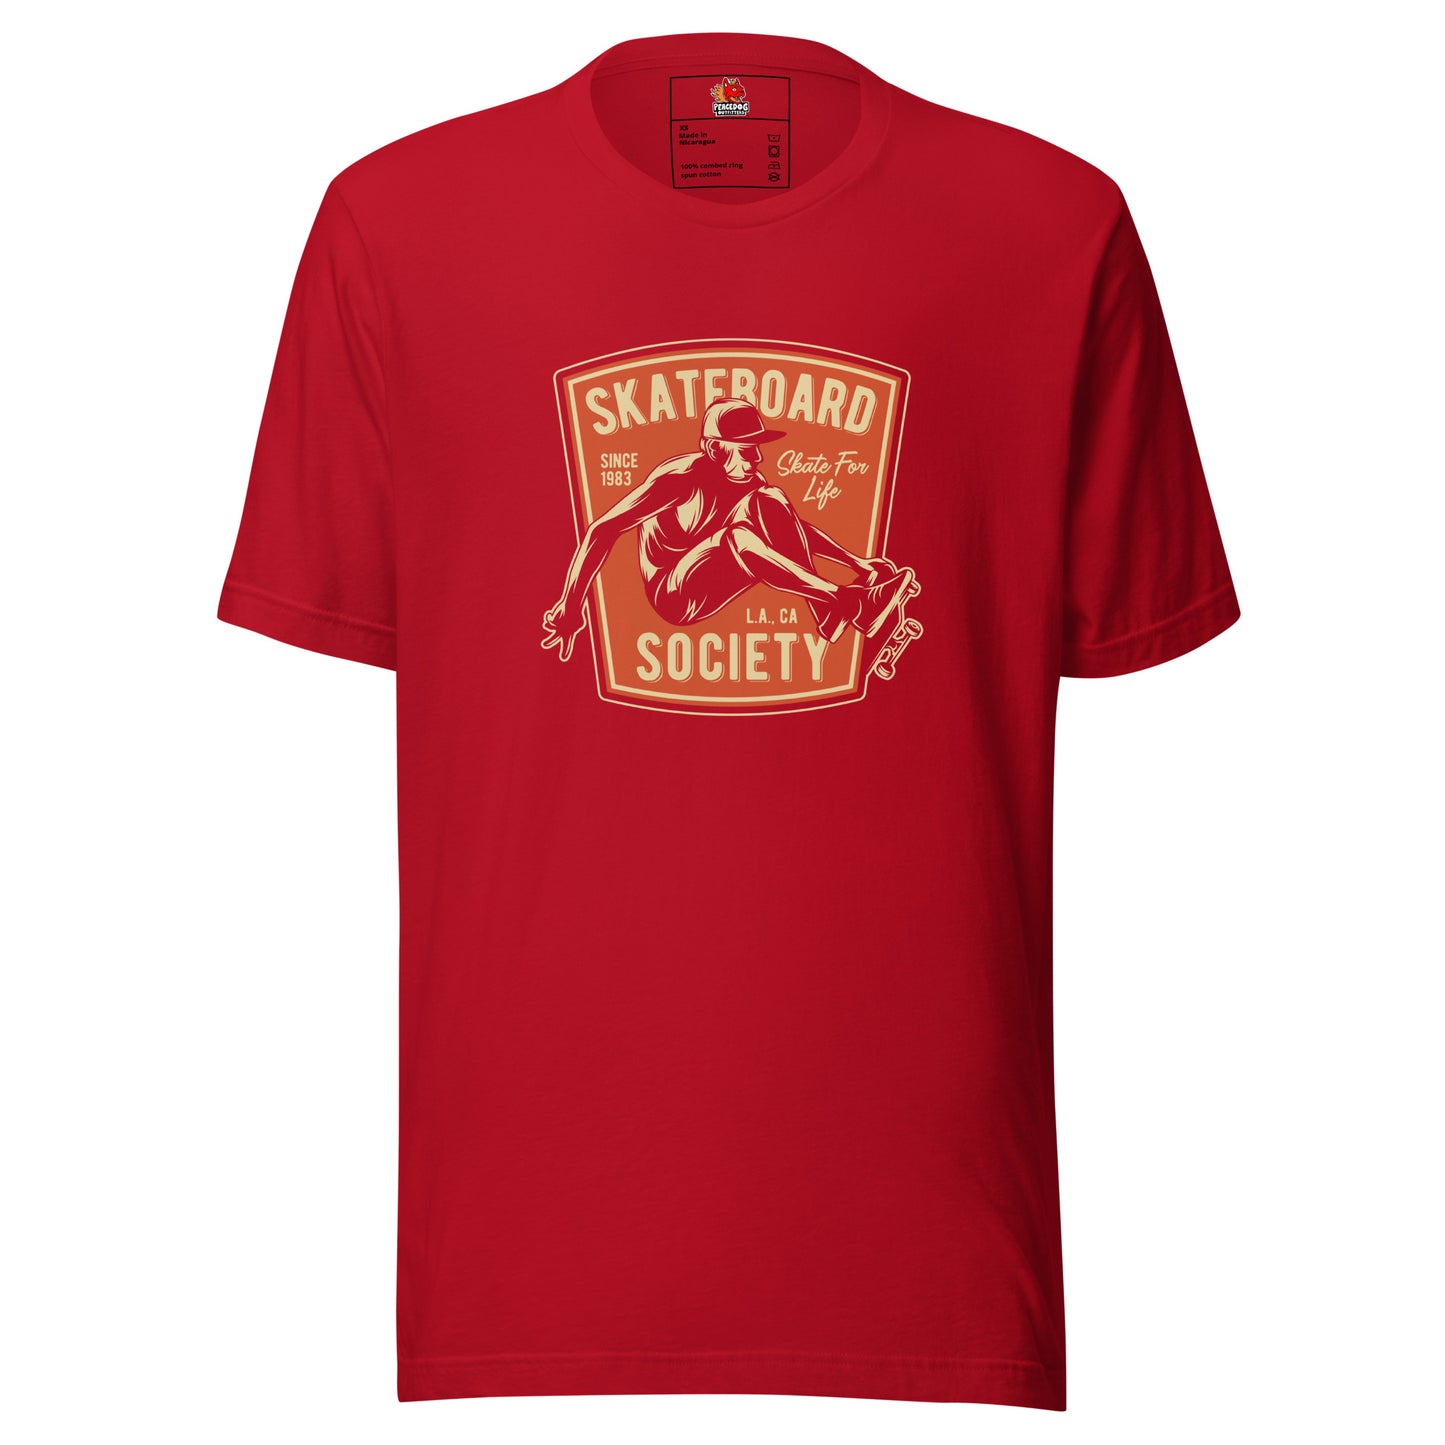 Skateboard Society T-shirt